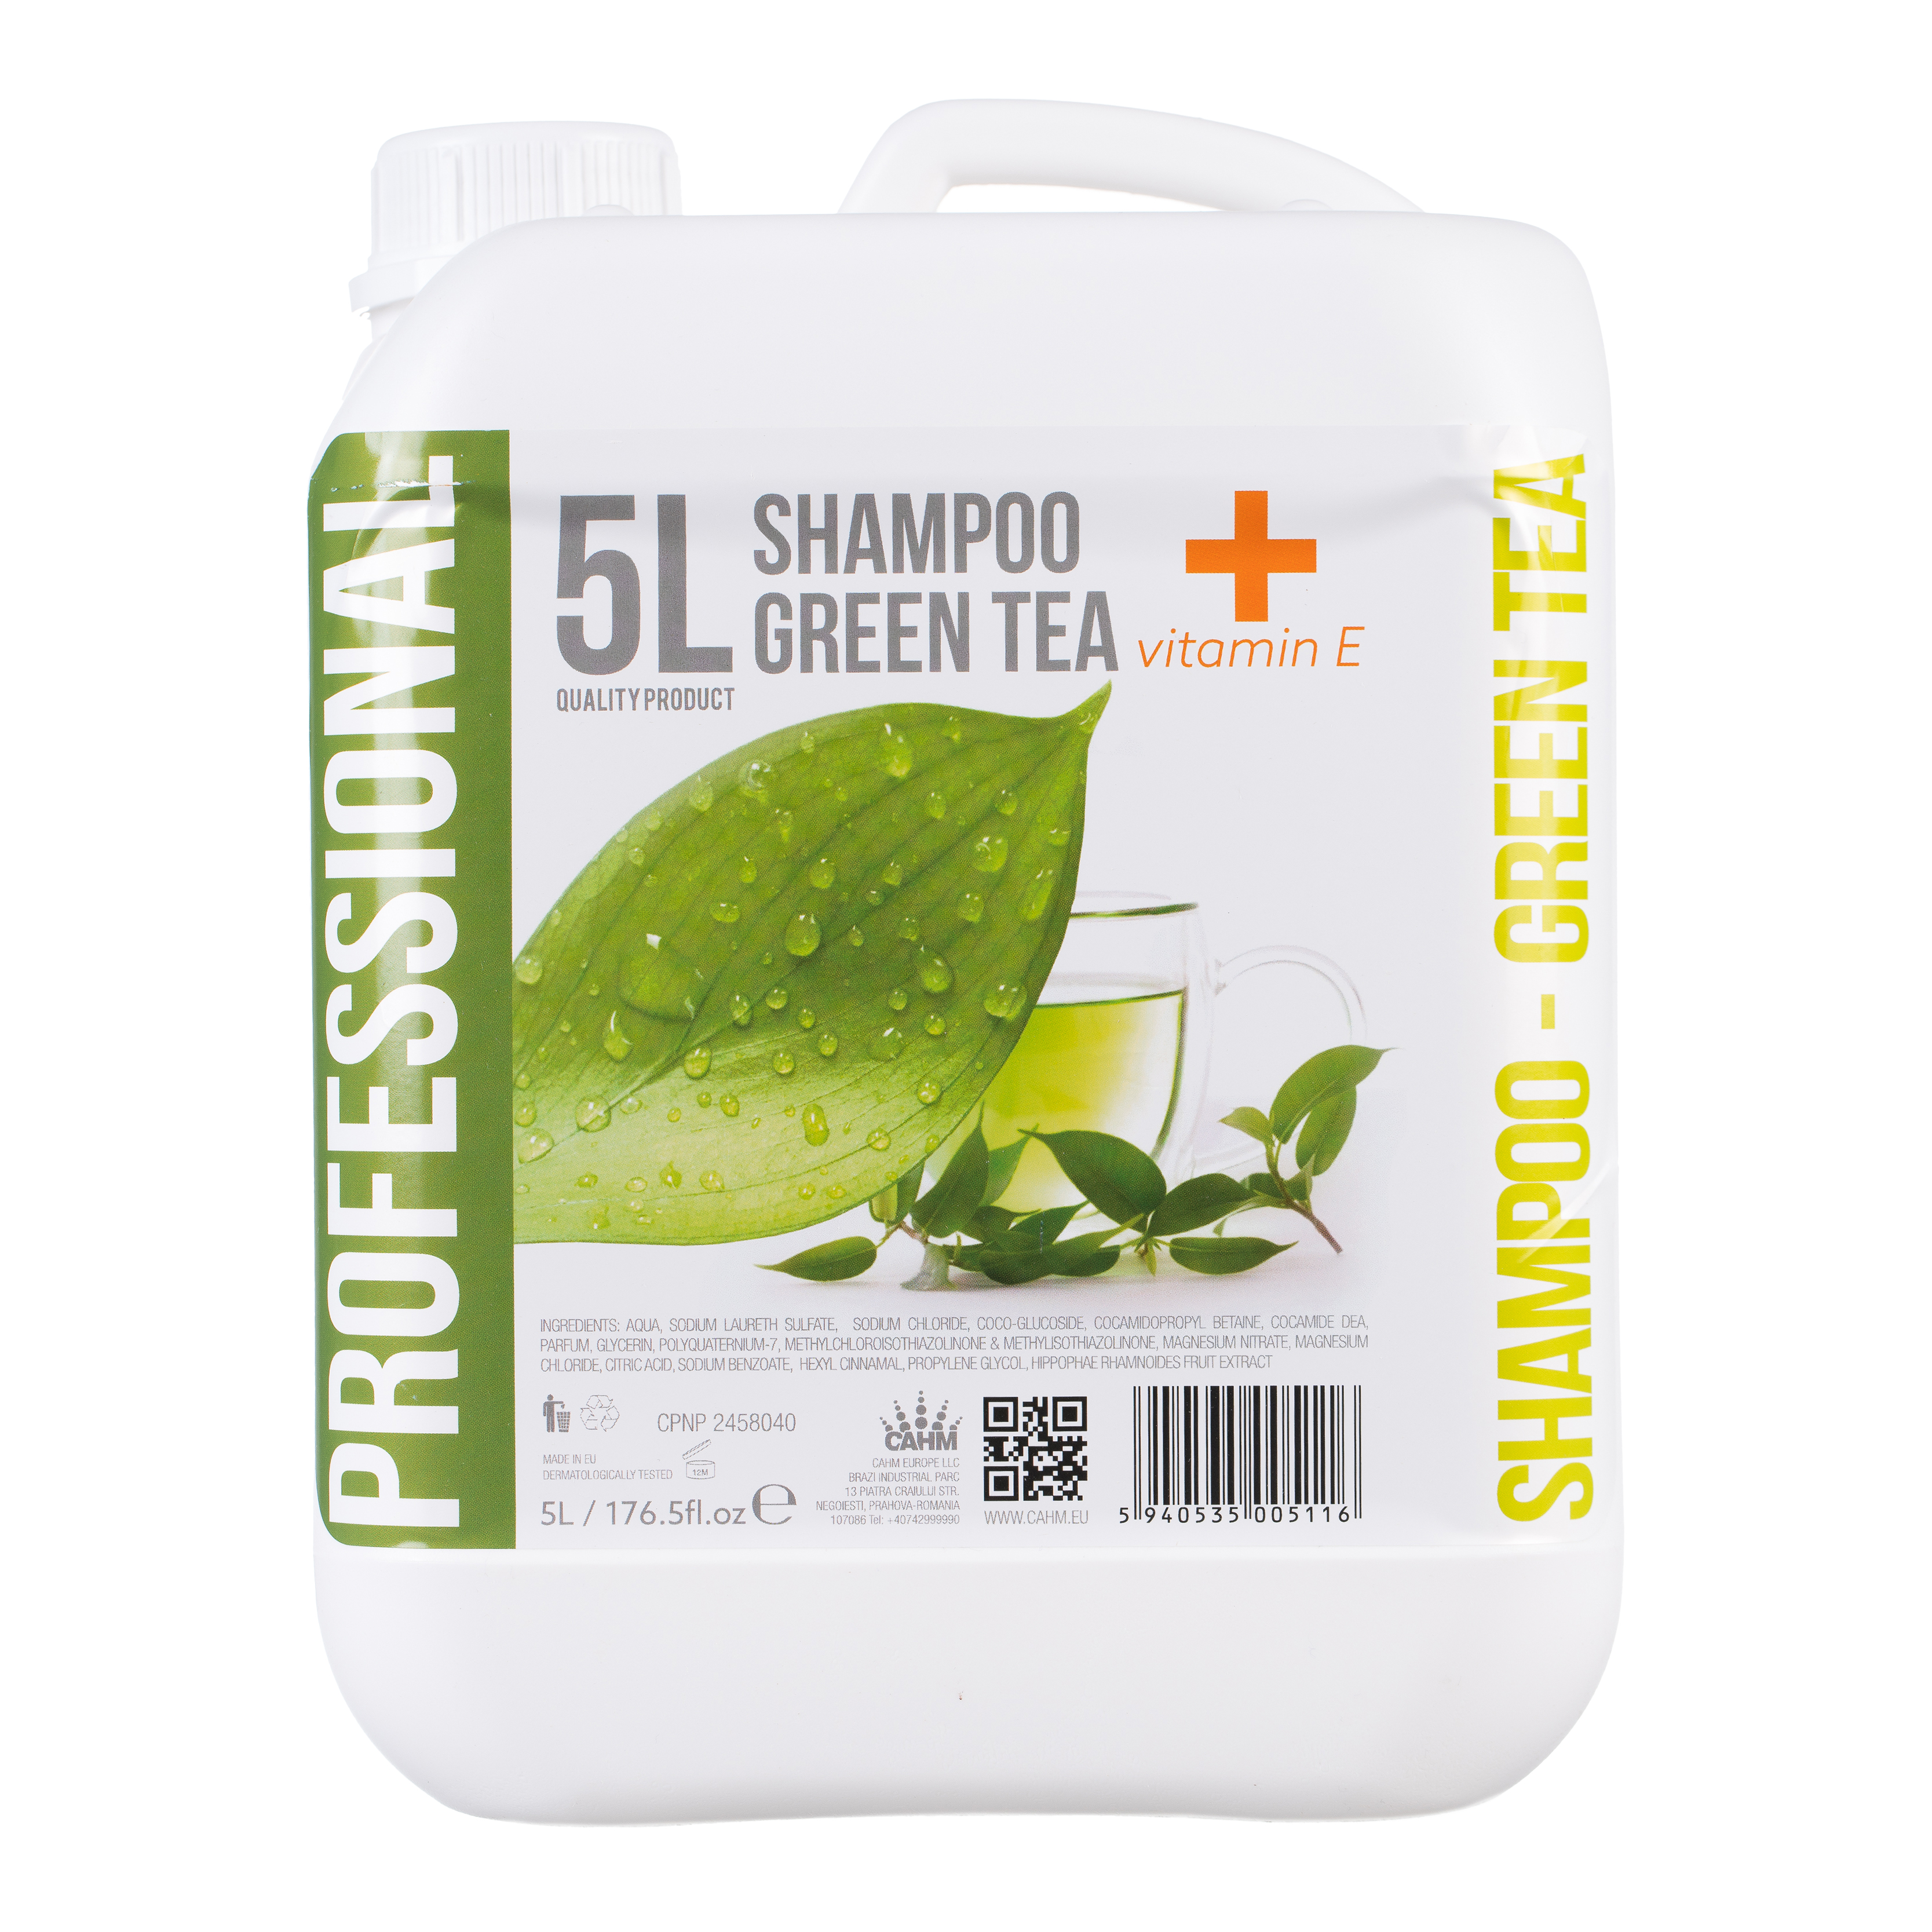 Sampon 5l- Green Tea + Vitamina E sanito.ro